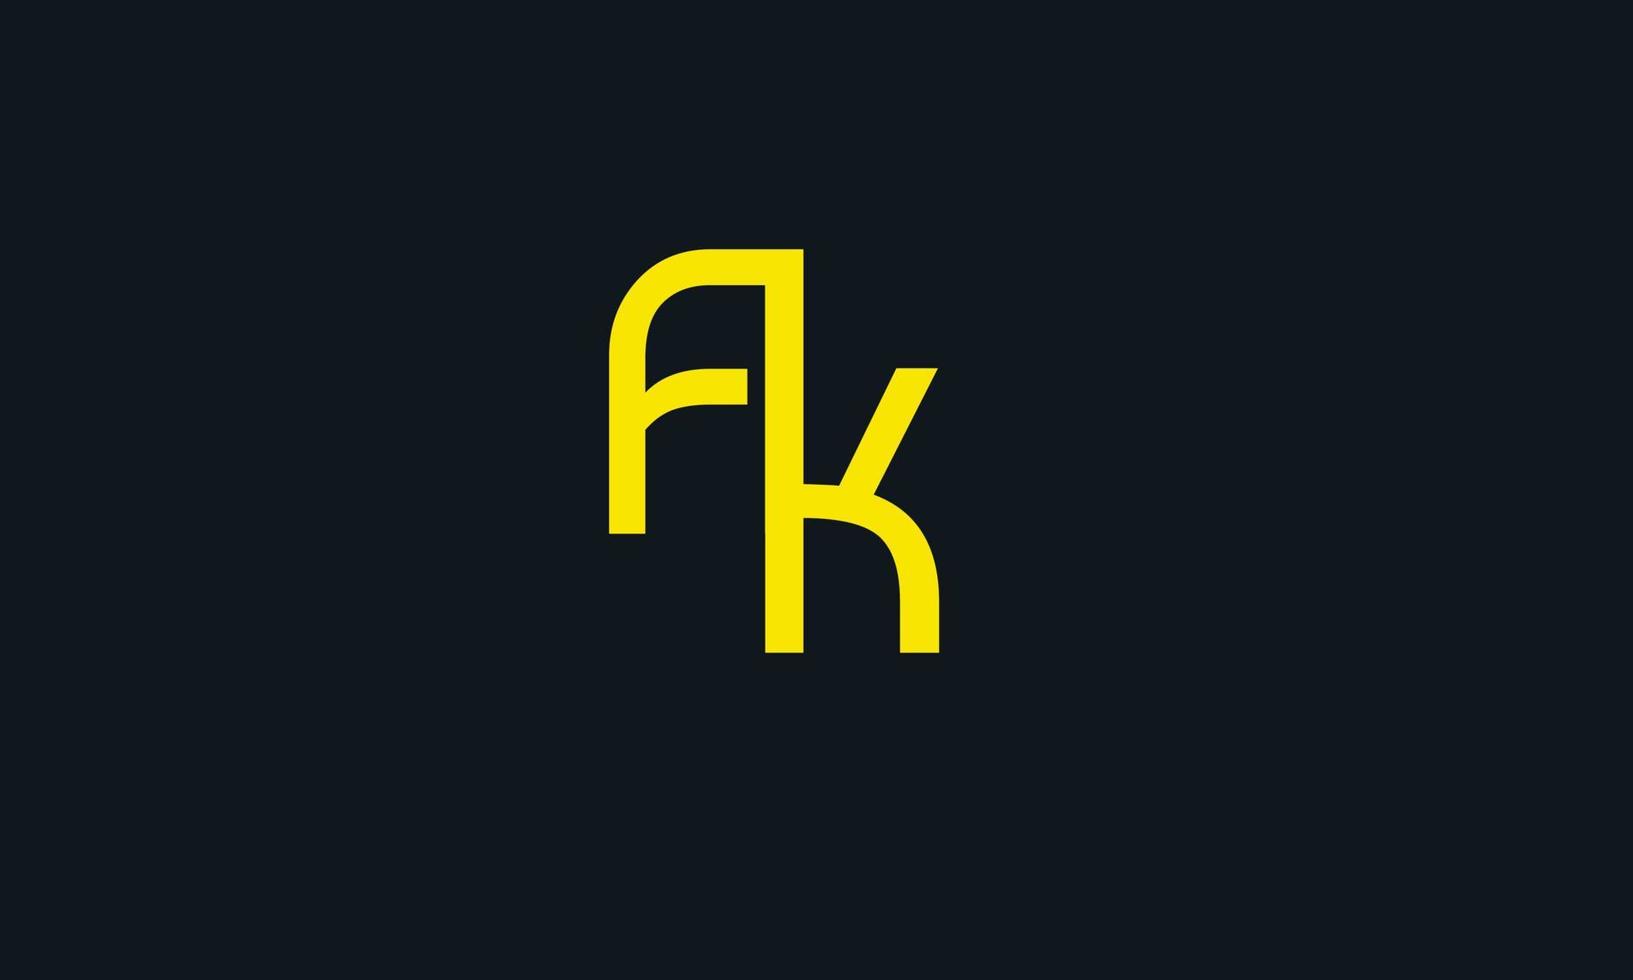 letras do alfabeto iniciais monograma logotipo fk, kf, f e k vetor